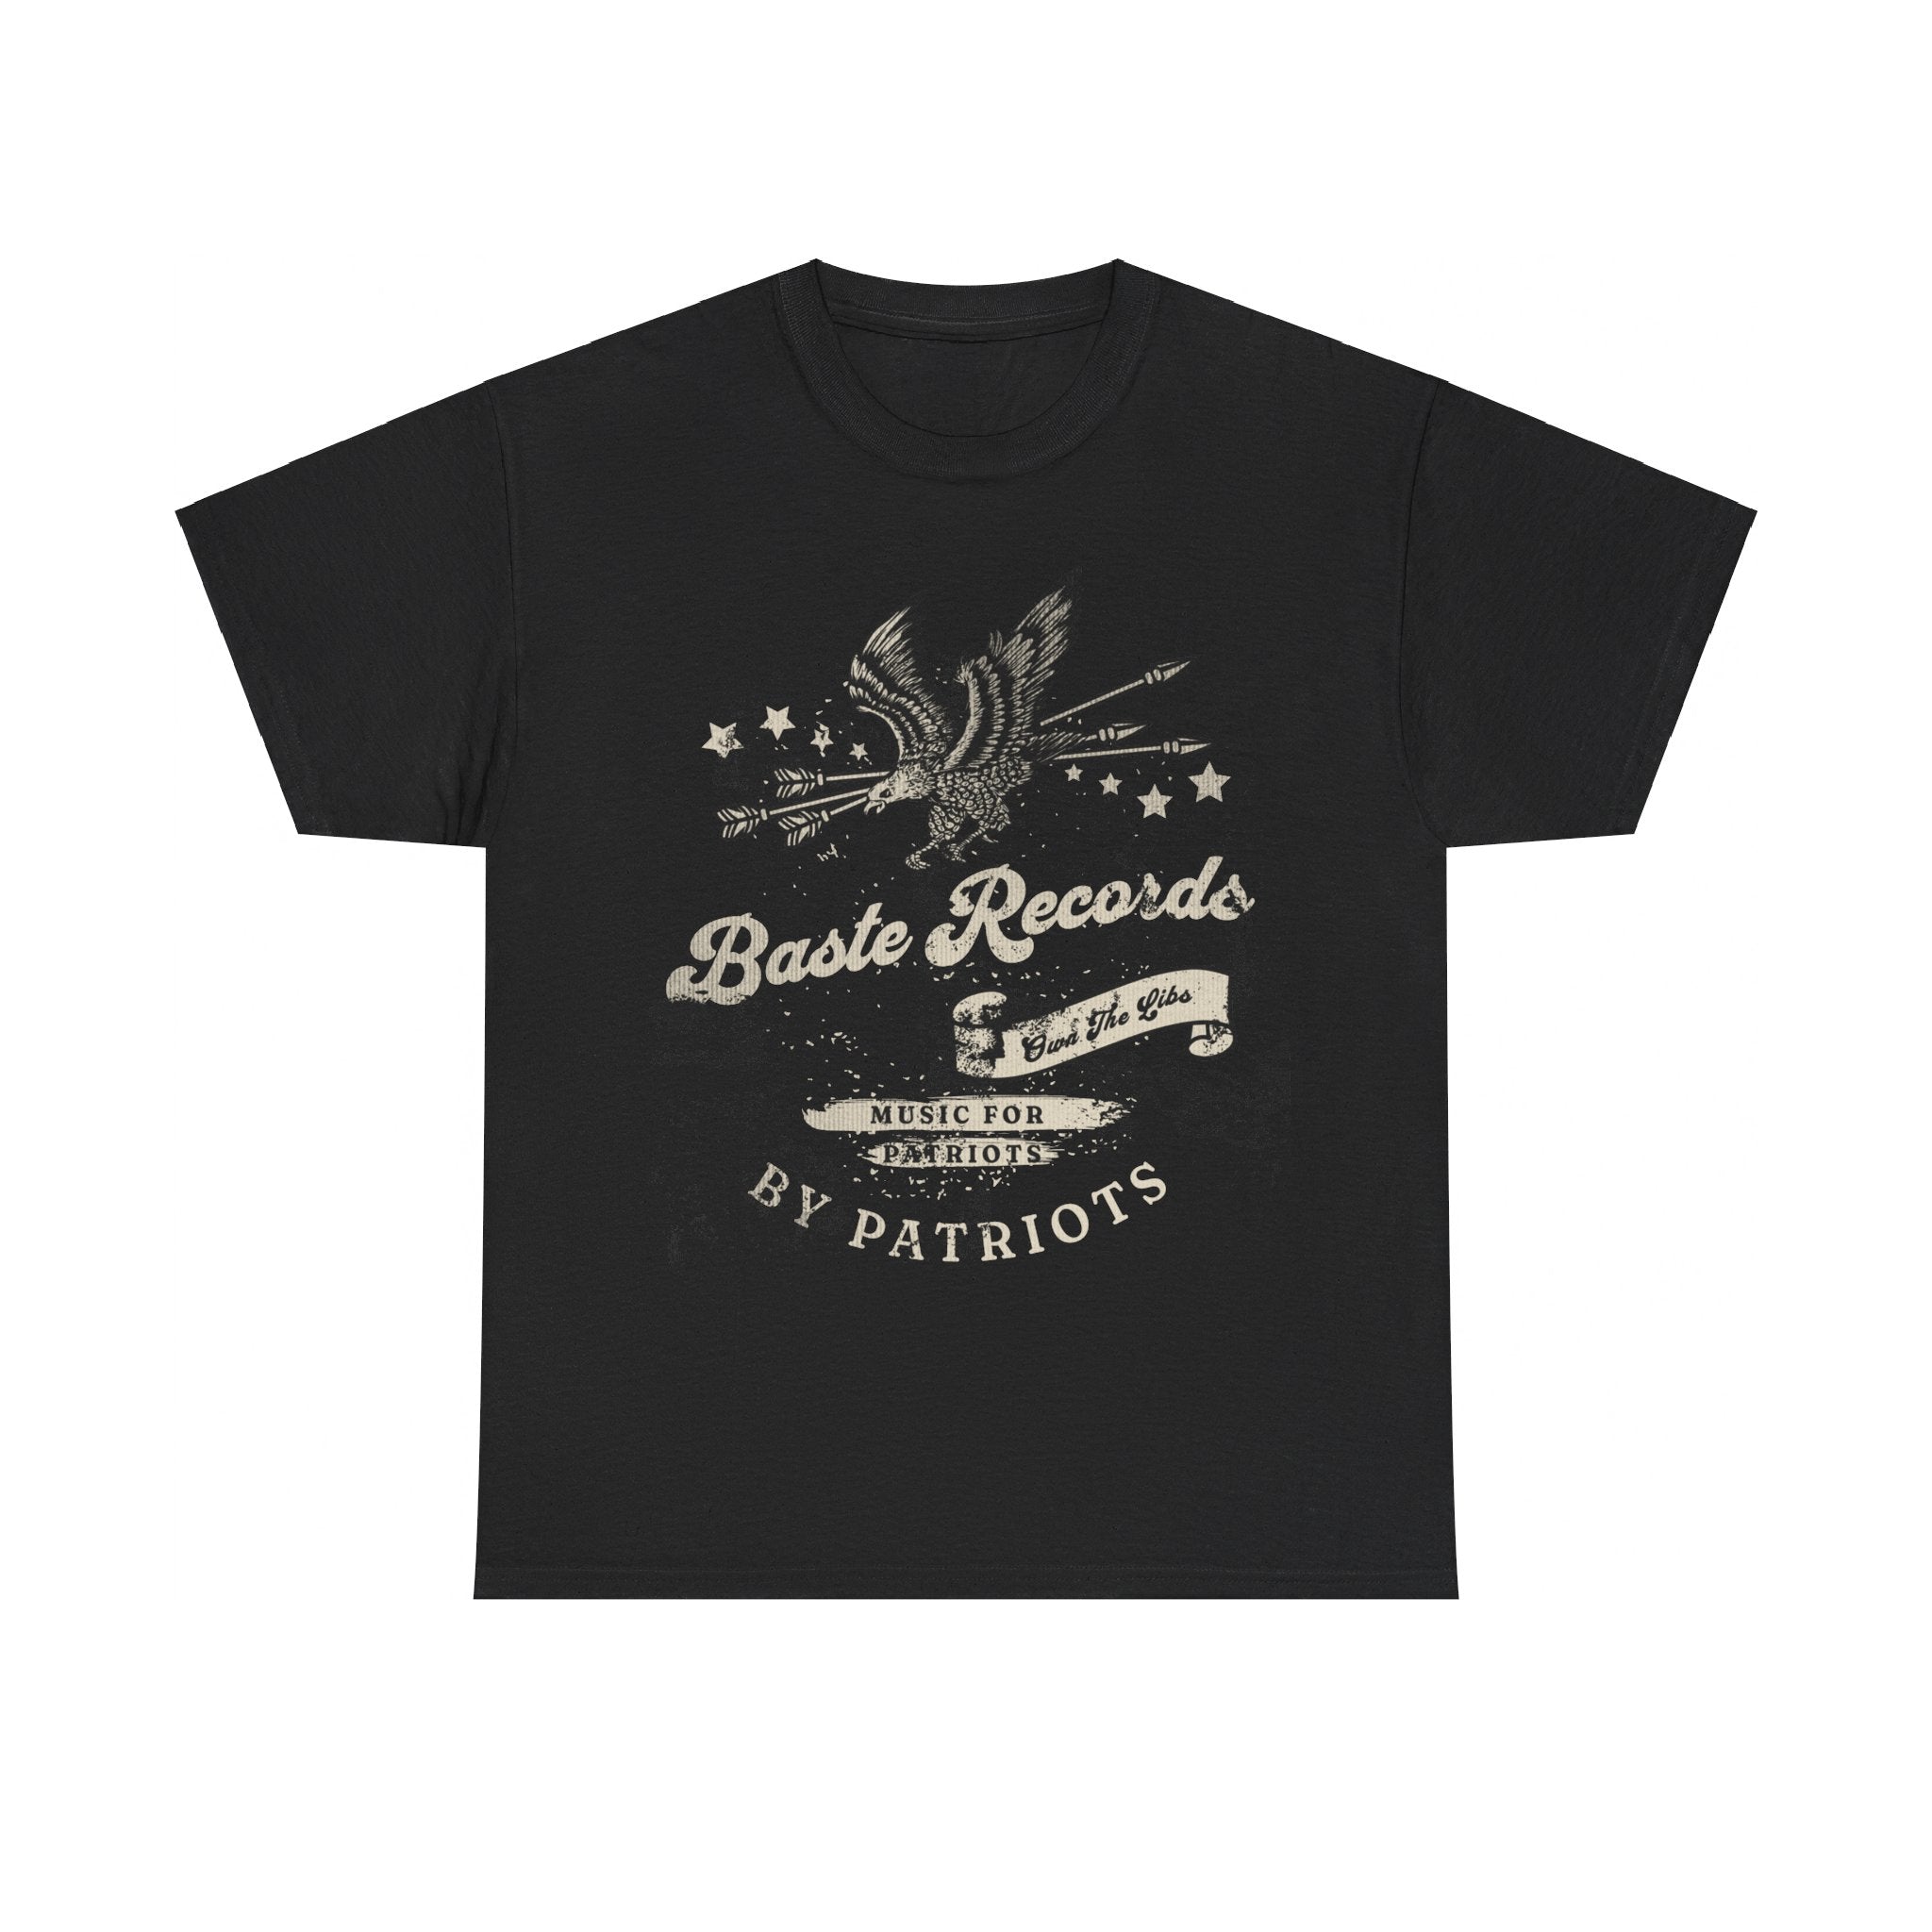 Baste Records Patriot Eagle T-Shirt